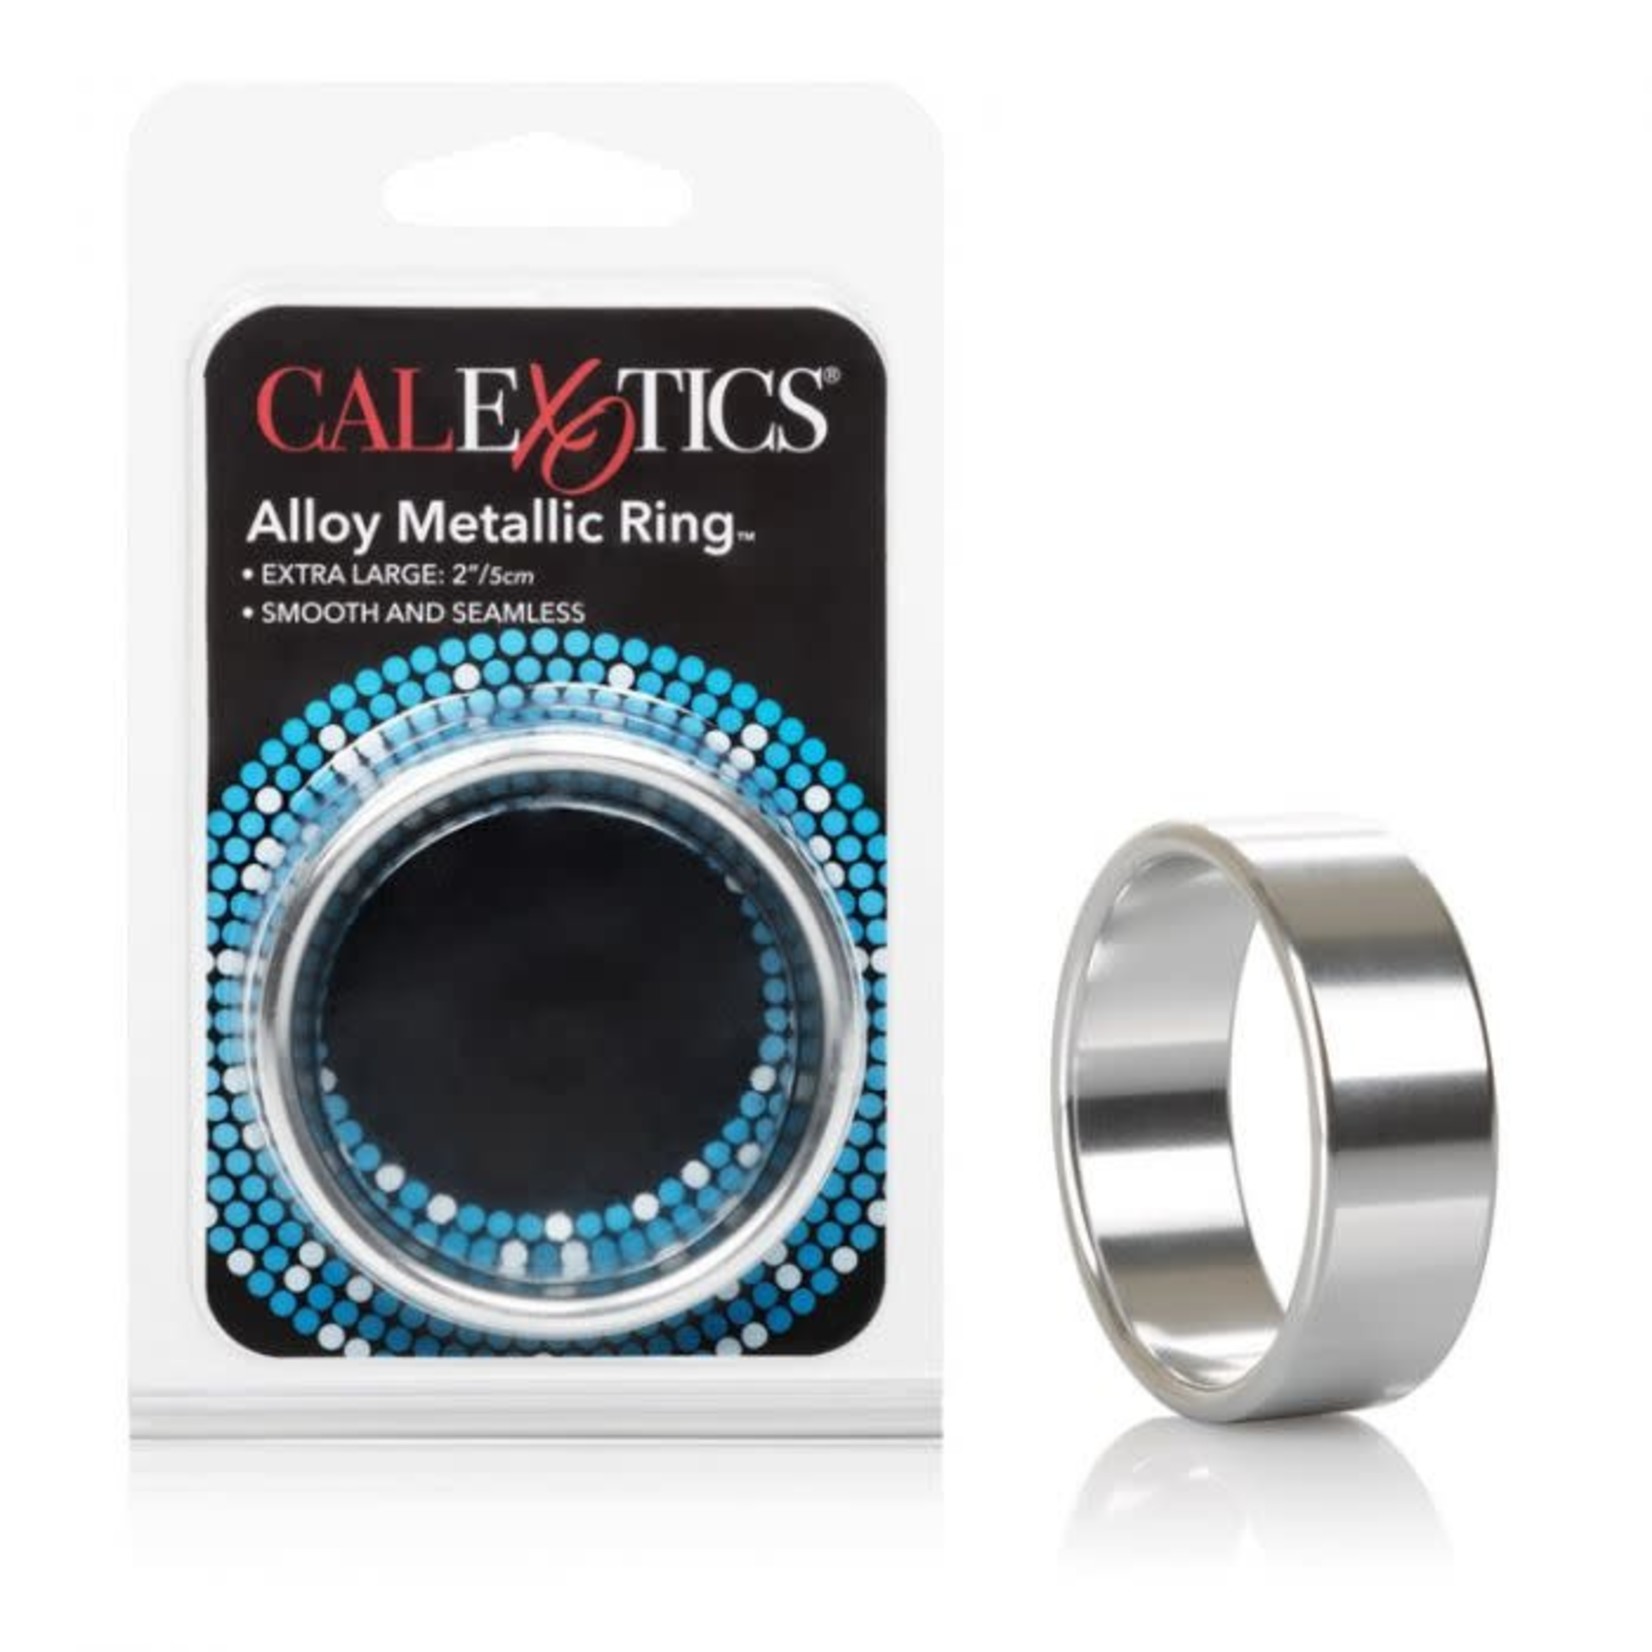 CALEXOTICS CALEXOTICS - ALLOY METALLIC RING - XLARGE 2"